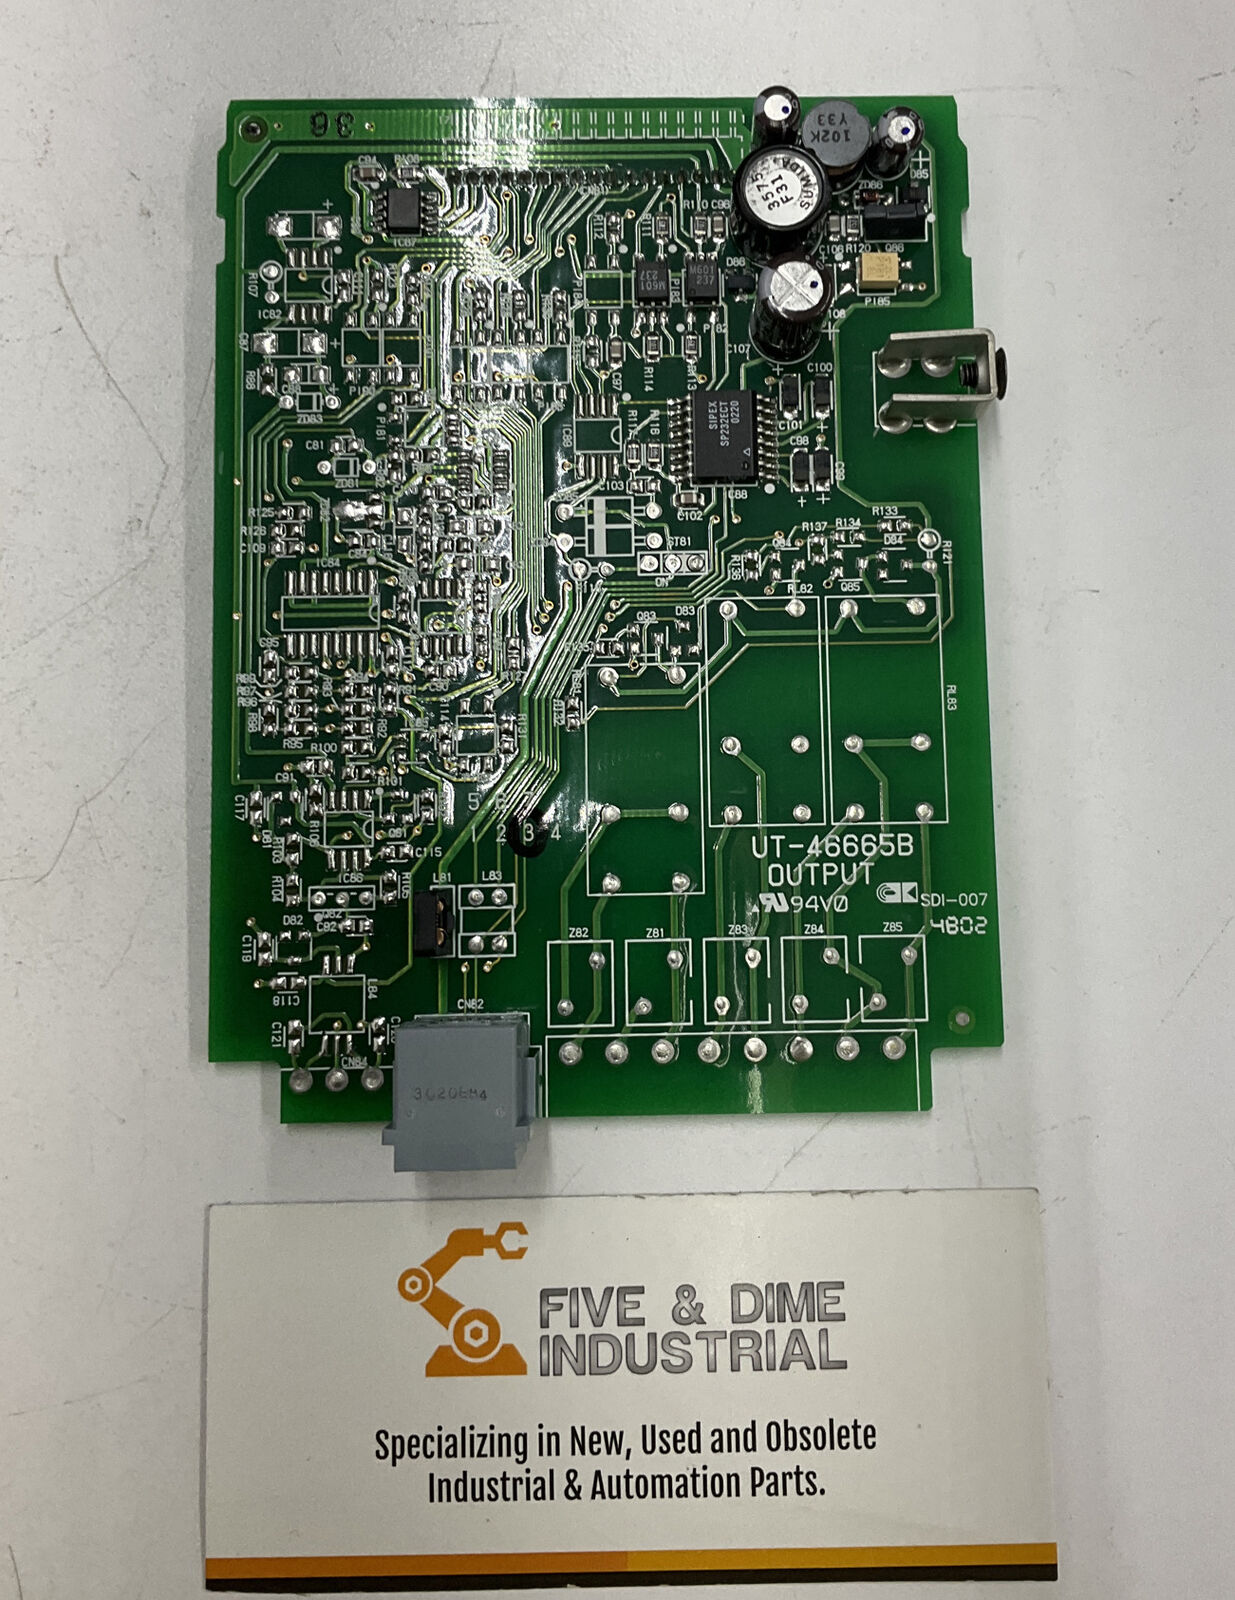 Fuji Electric YFD5003 / UT-46665B Digital Meter Output PCB (CL207) - 0